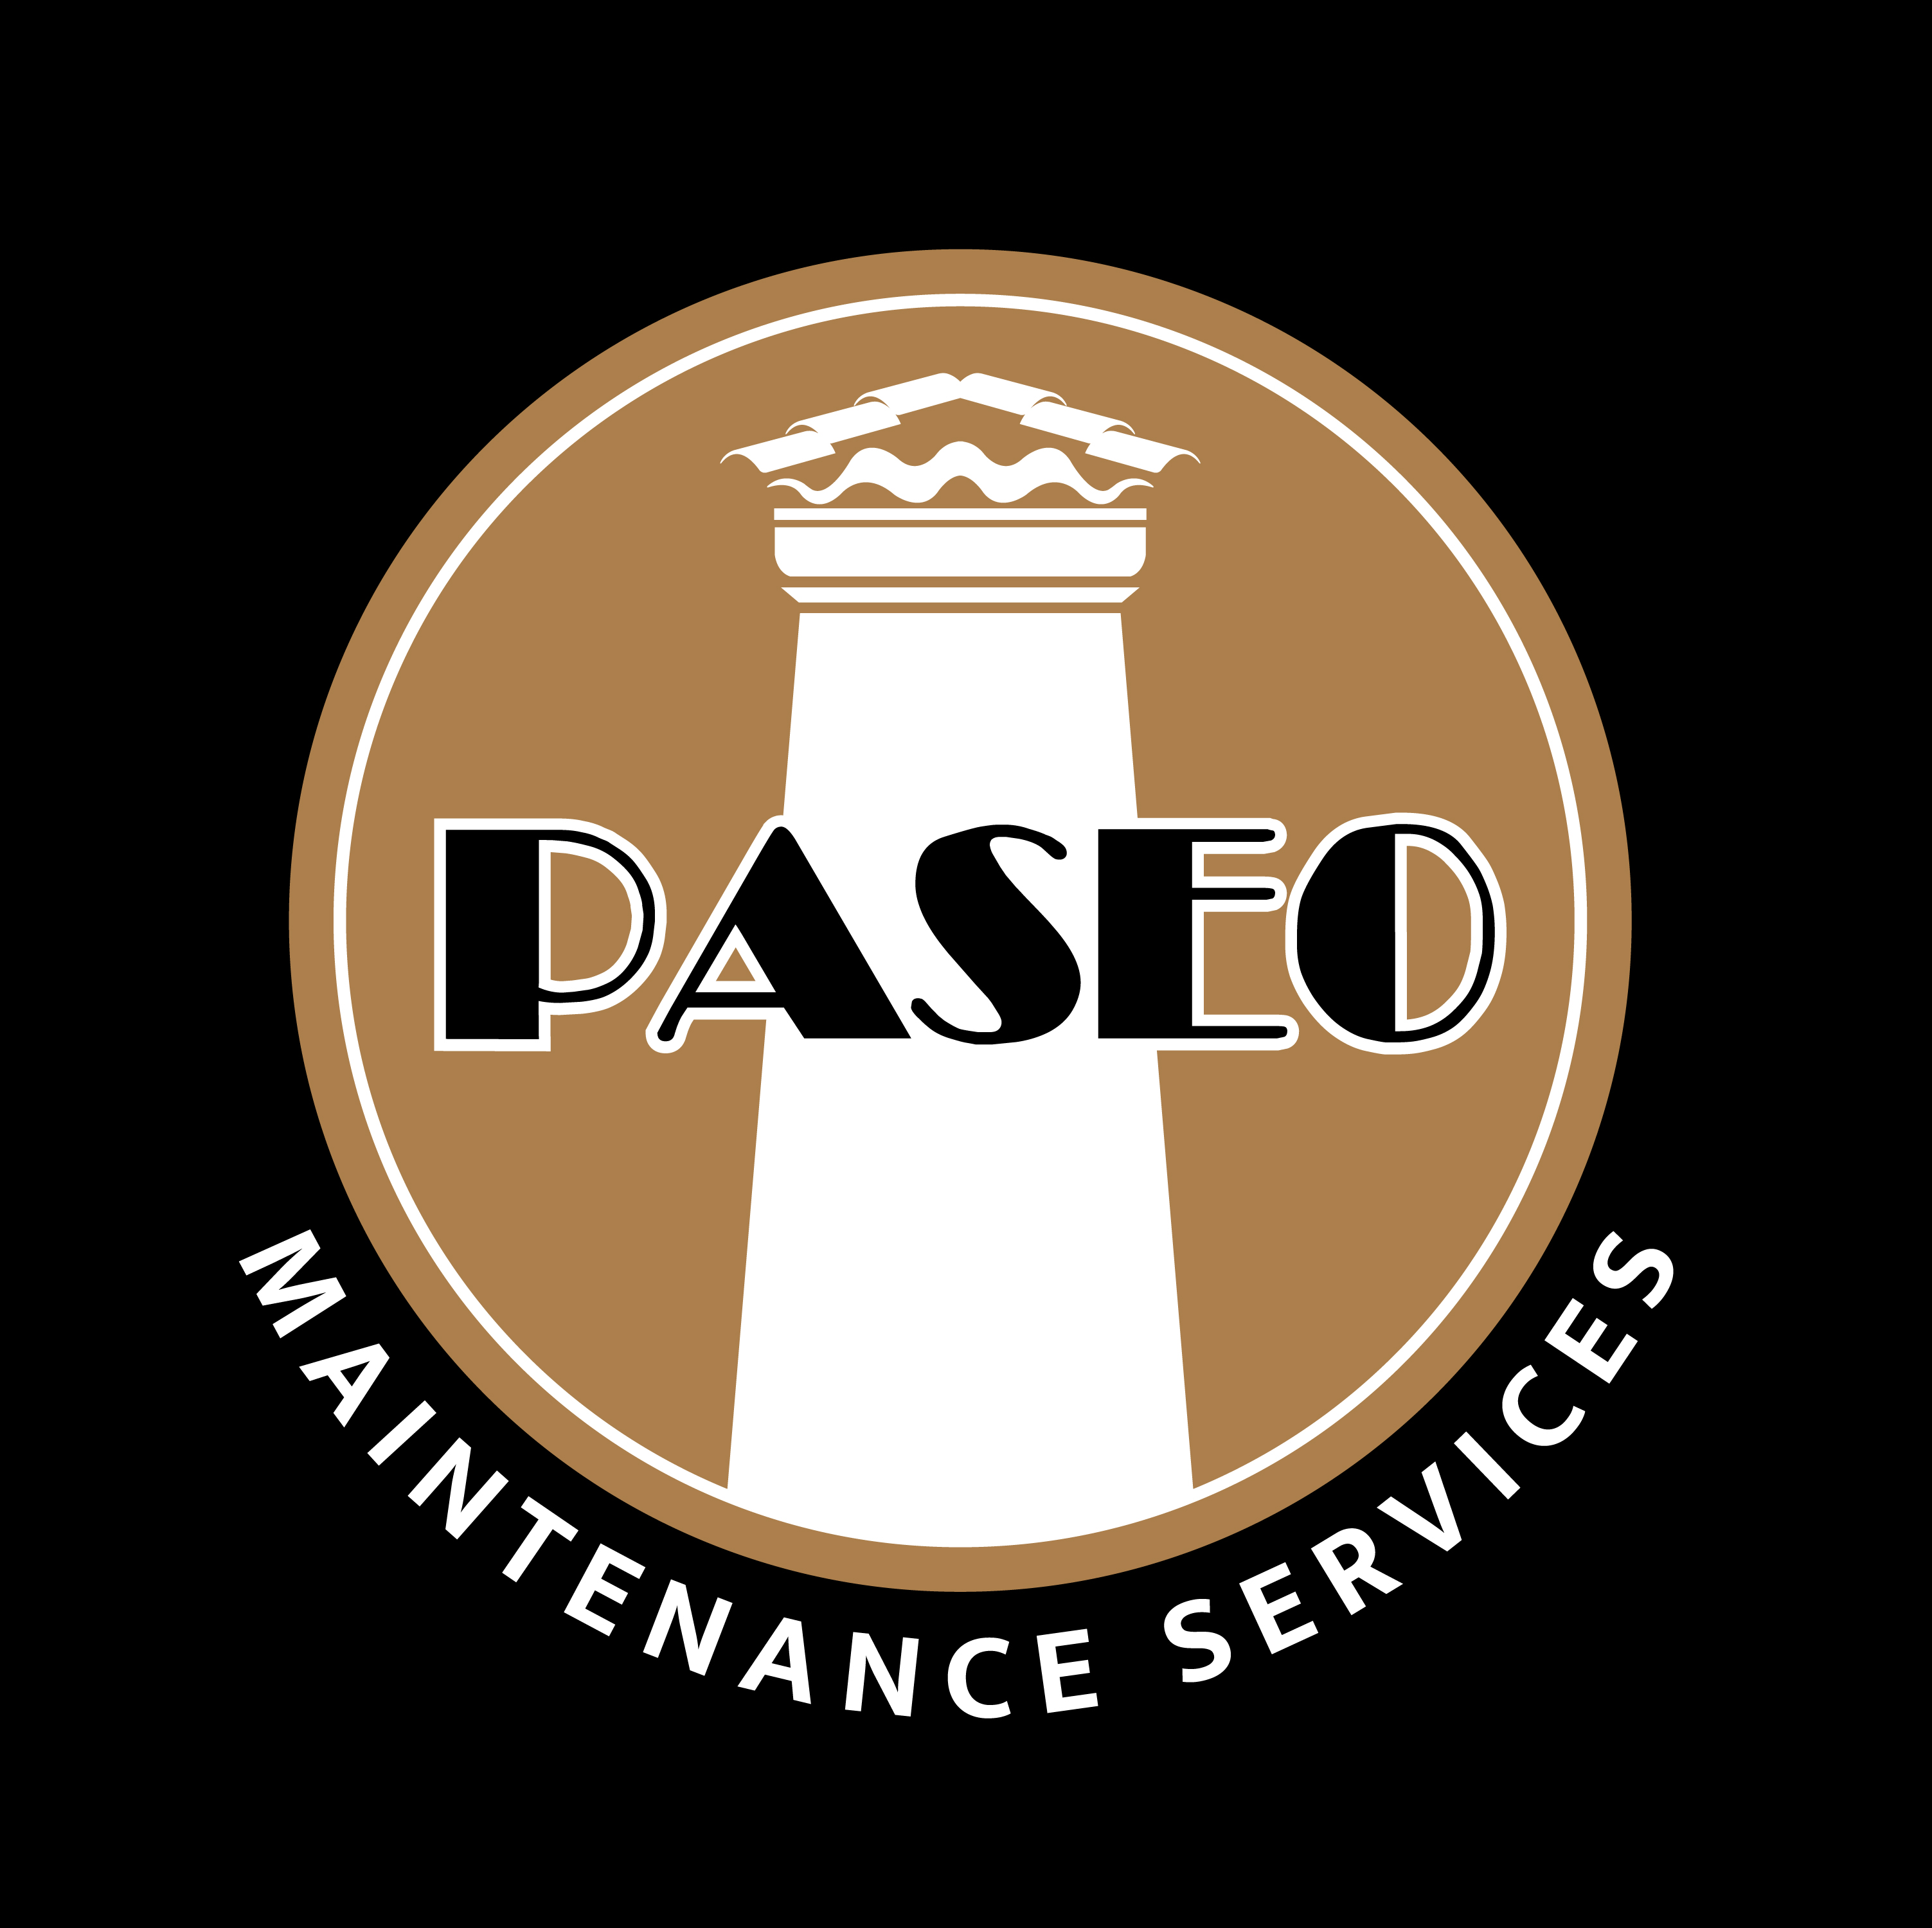 PASEO MAINTENANCE SERVICES, LLC Logo